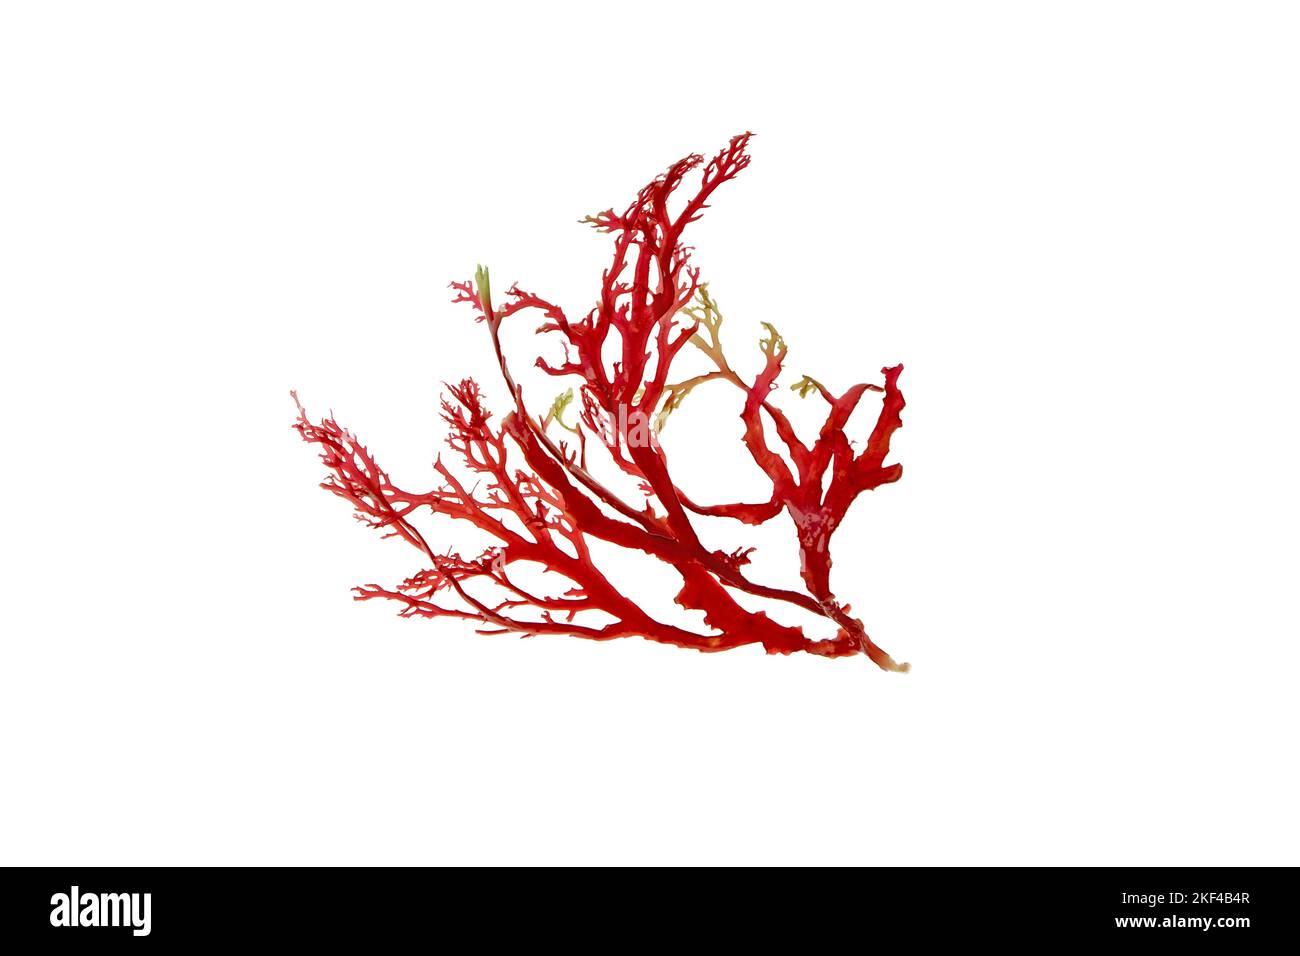 Algas rojas o ramas de algas aisladas sobre blanco. Foto de stock